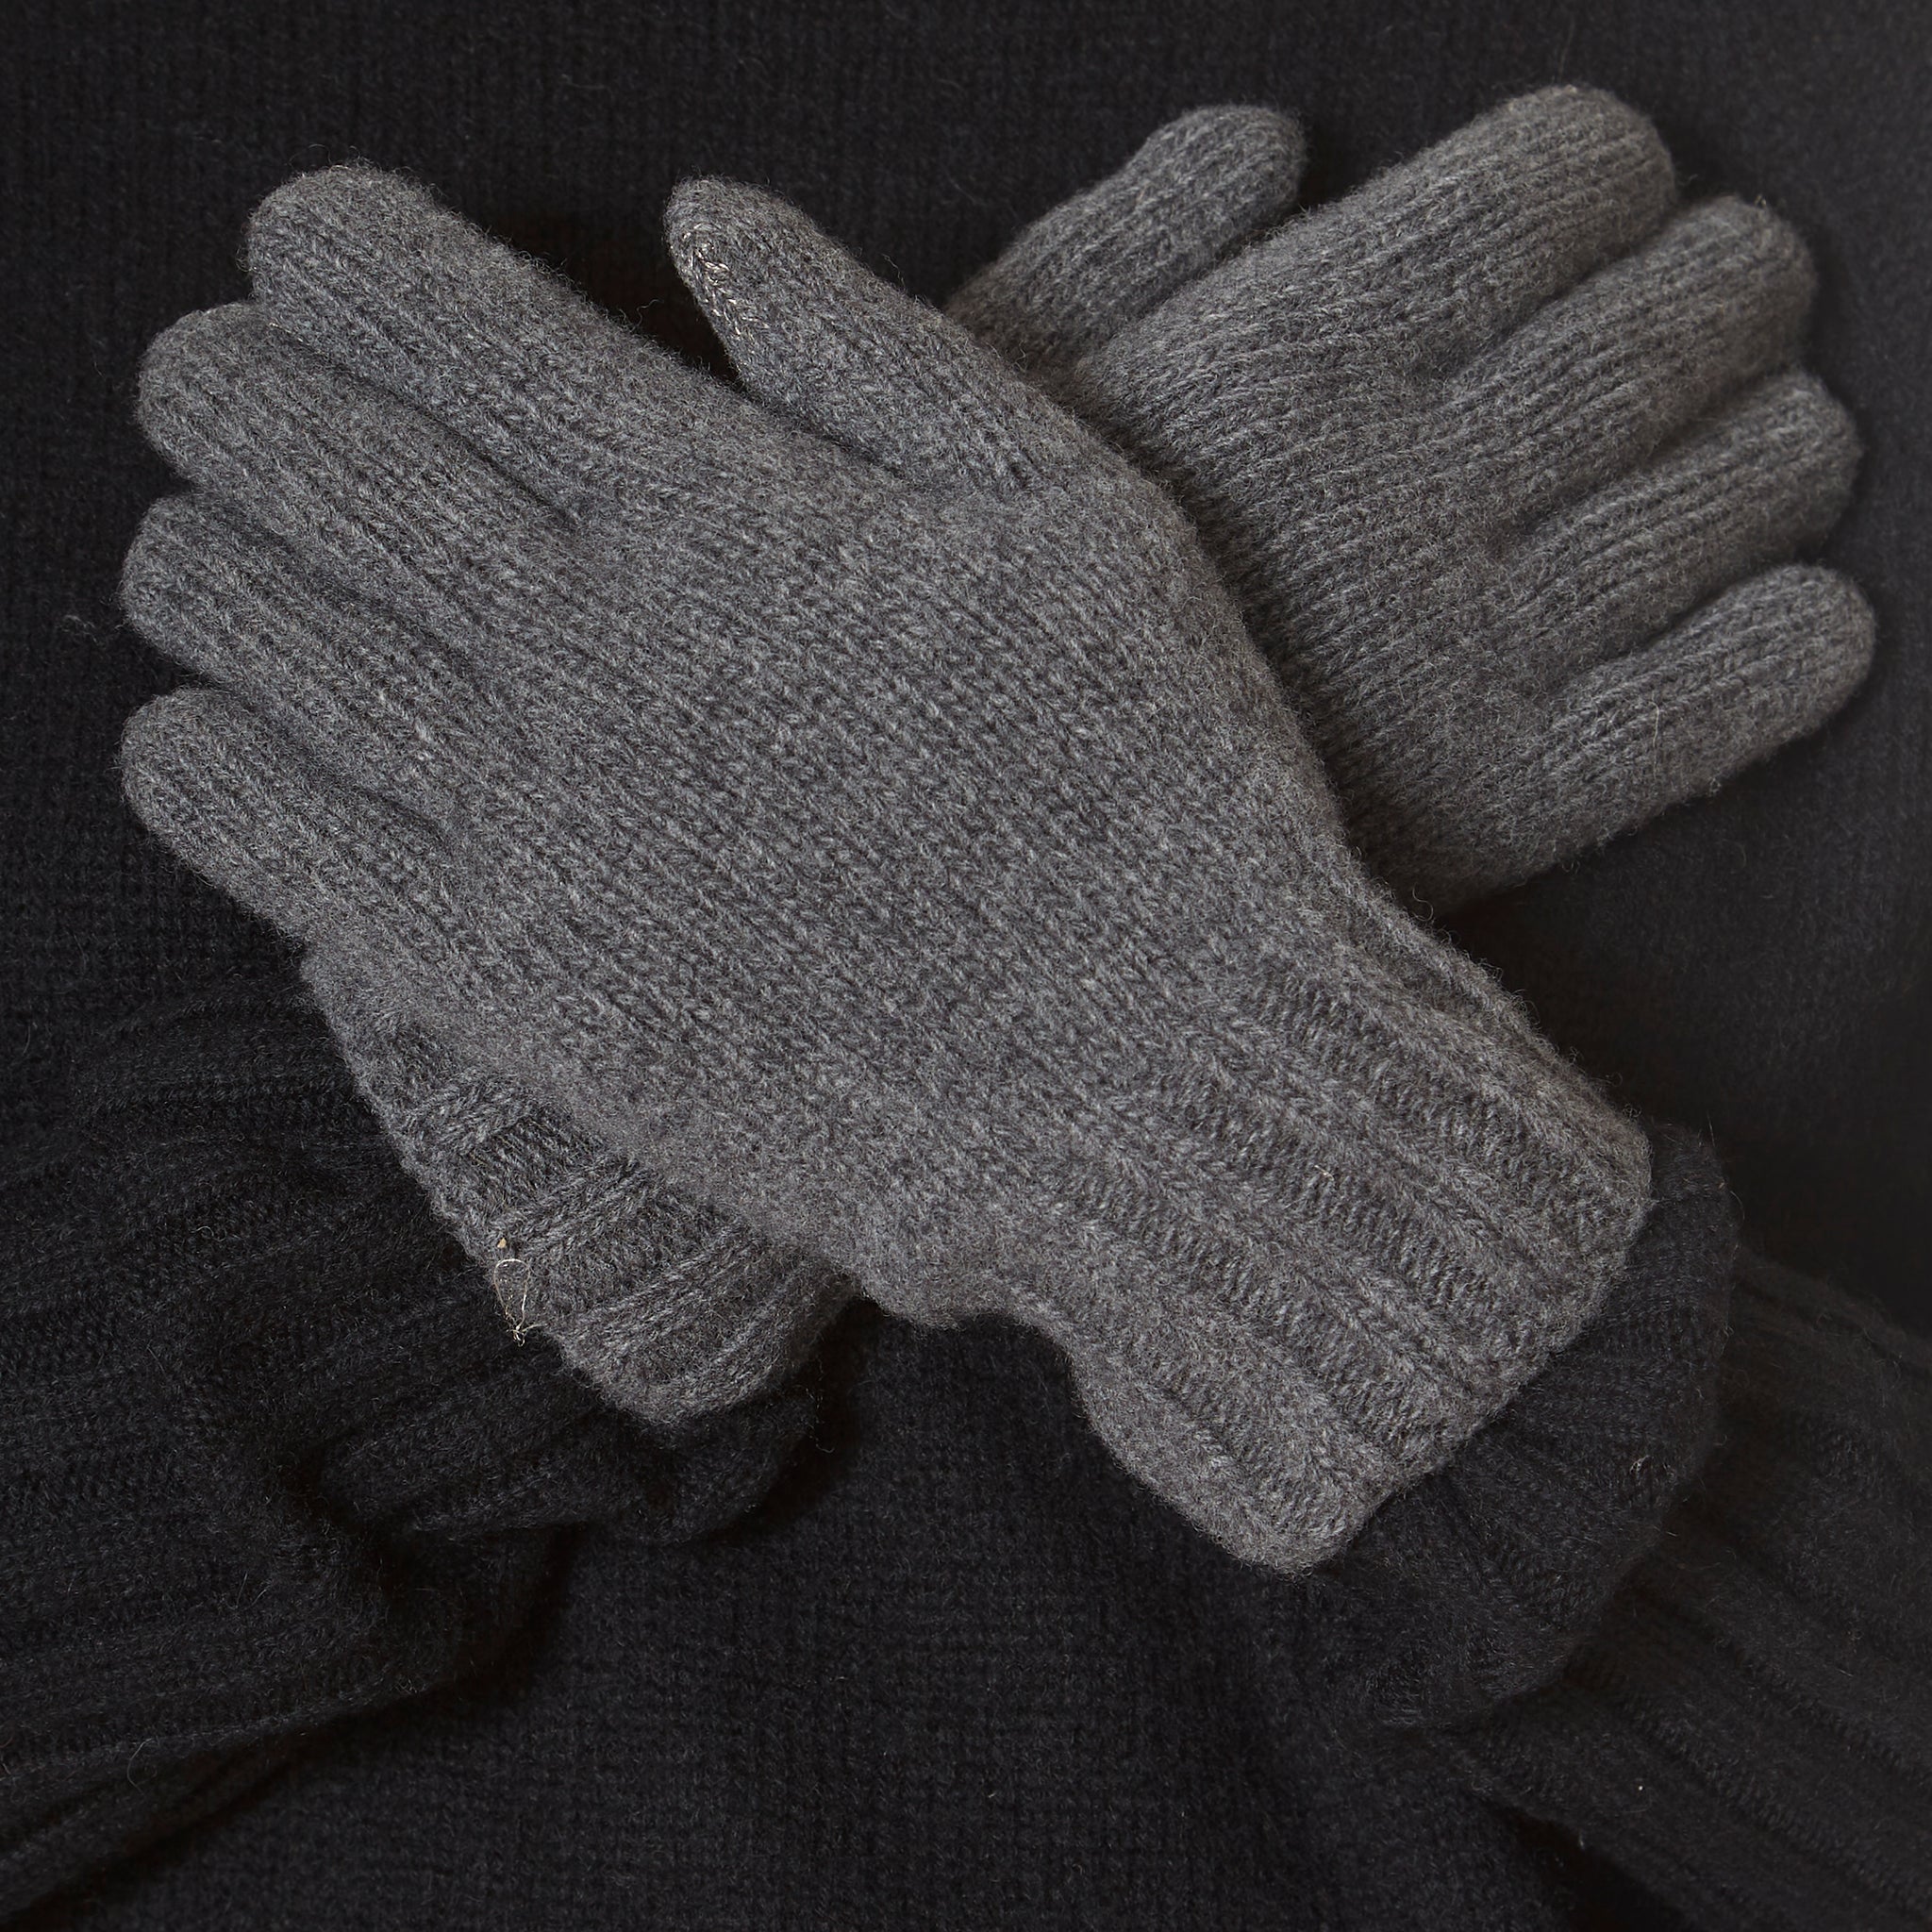 Santacana Men Dark Grey Gloves 'Cashmere Blend' - Jessimara